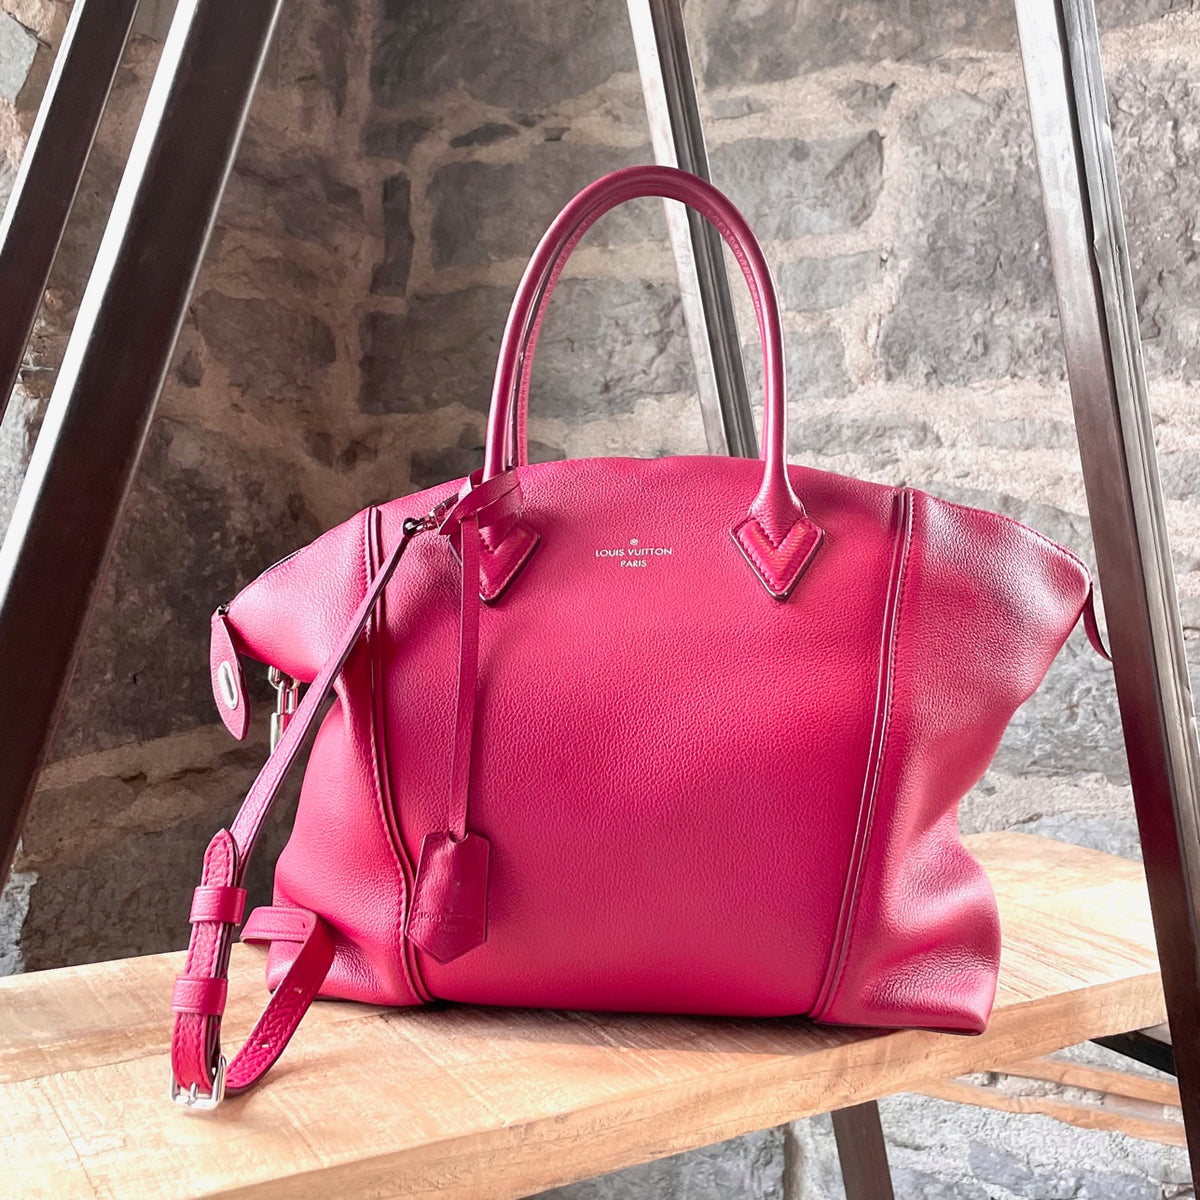 Soft lockit leather handbag Louis Vuitton Grey in Leather - 31871213